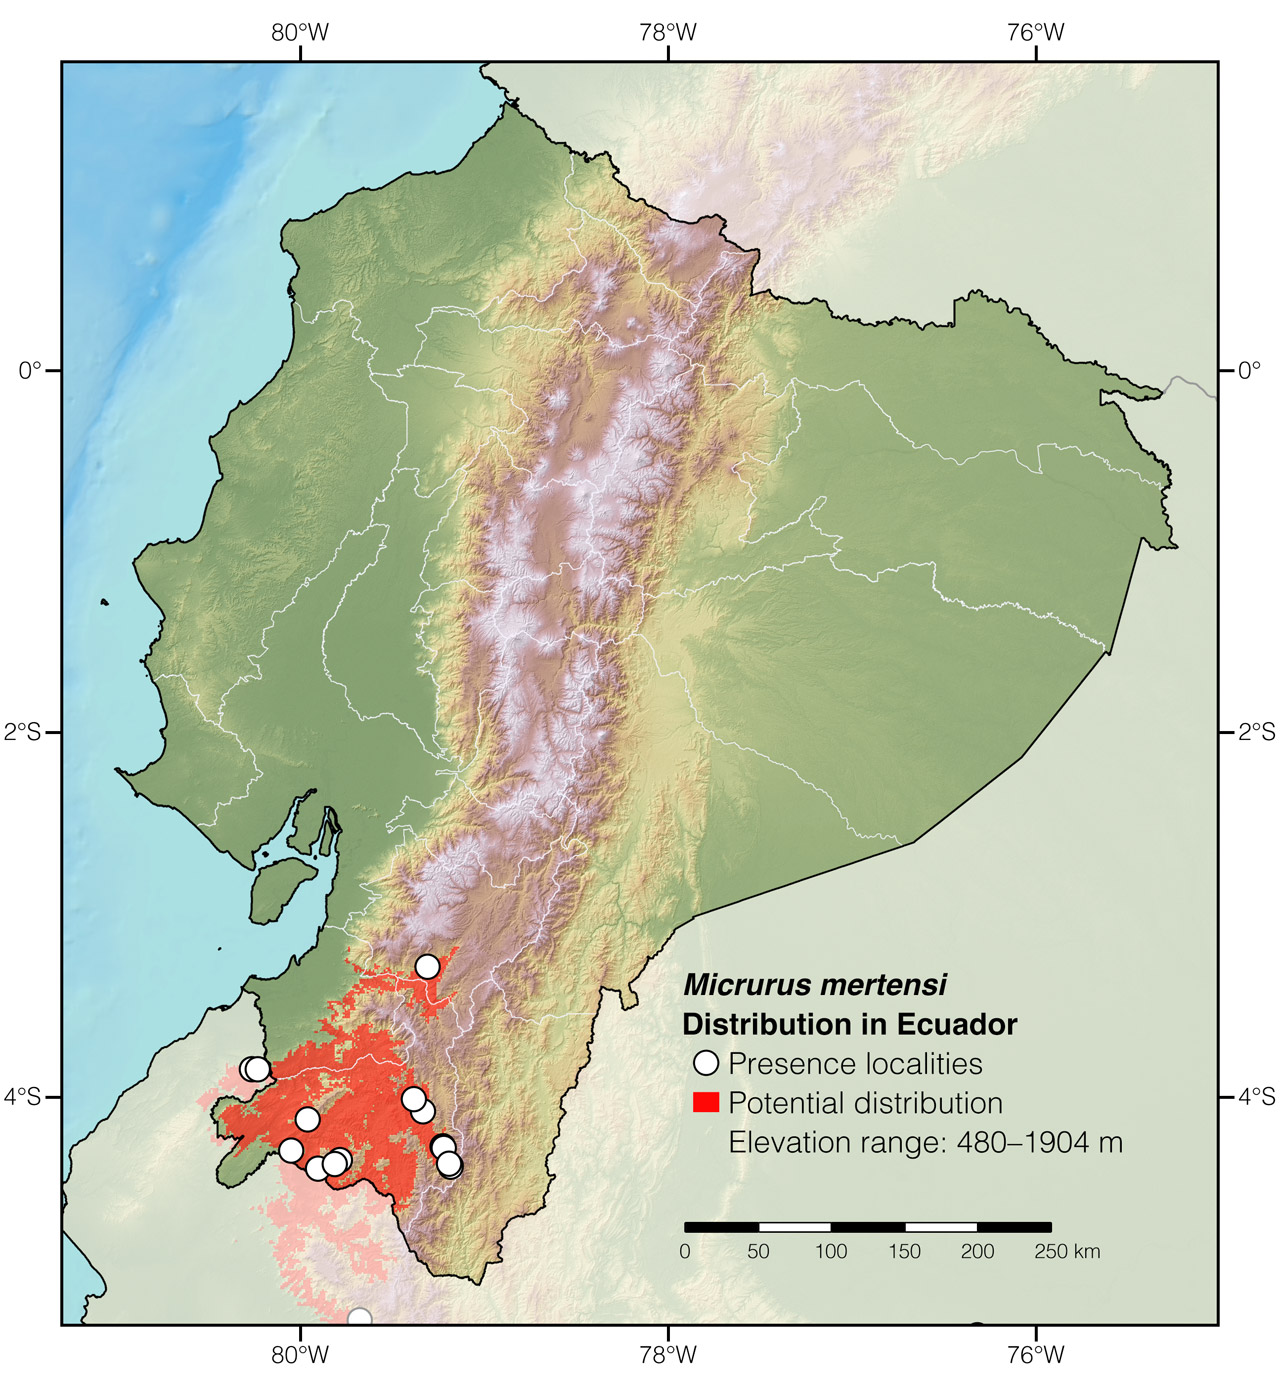 Distribution of Micrurus mertensi in Ecuador